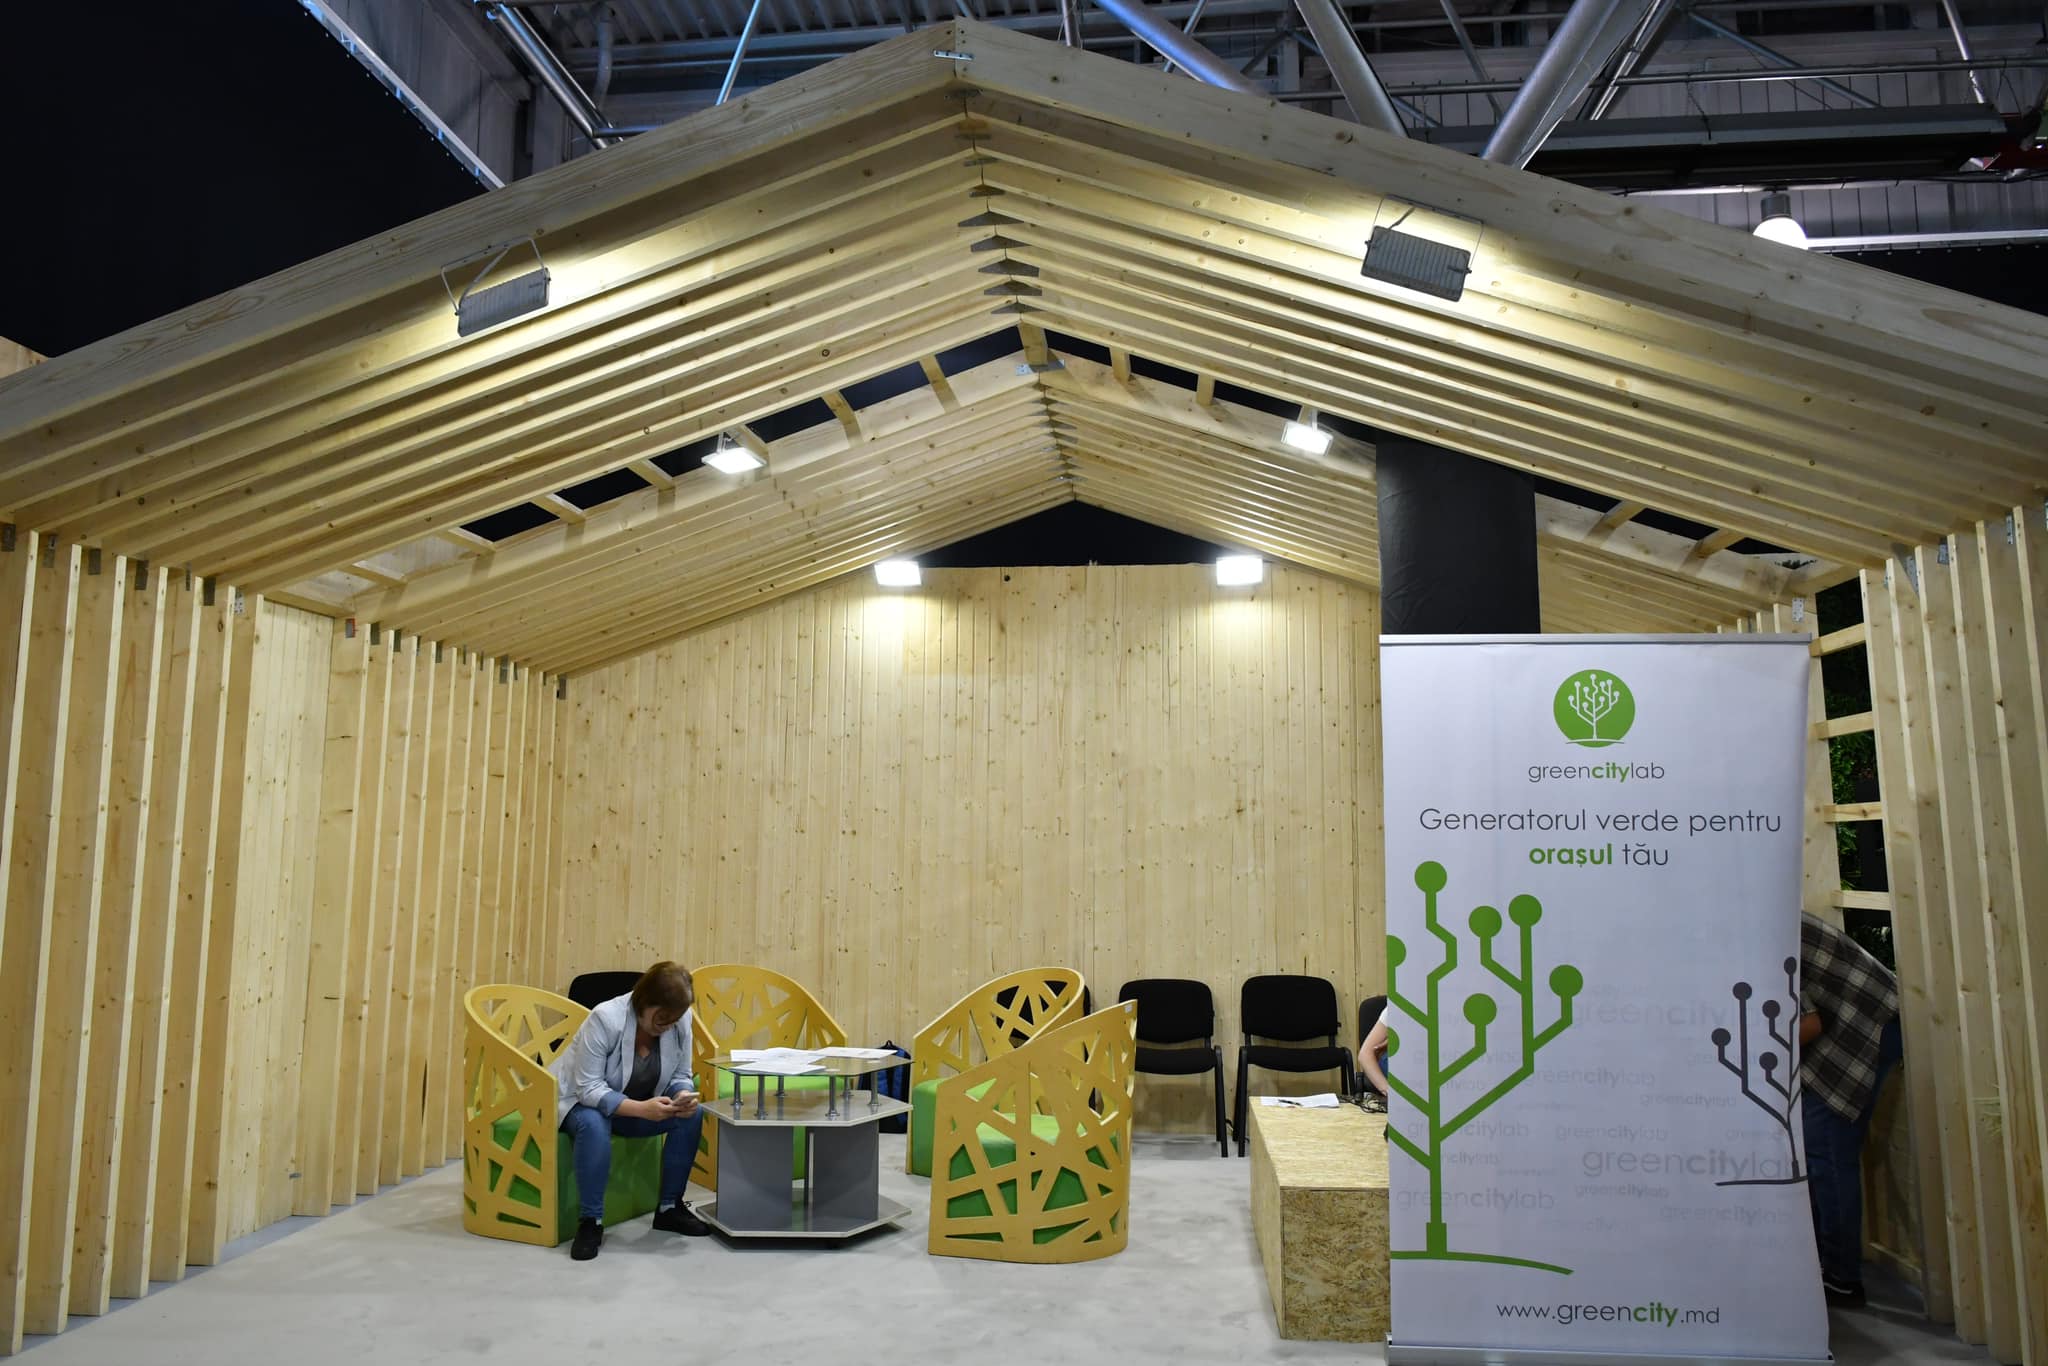 Eco Green Expo